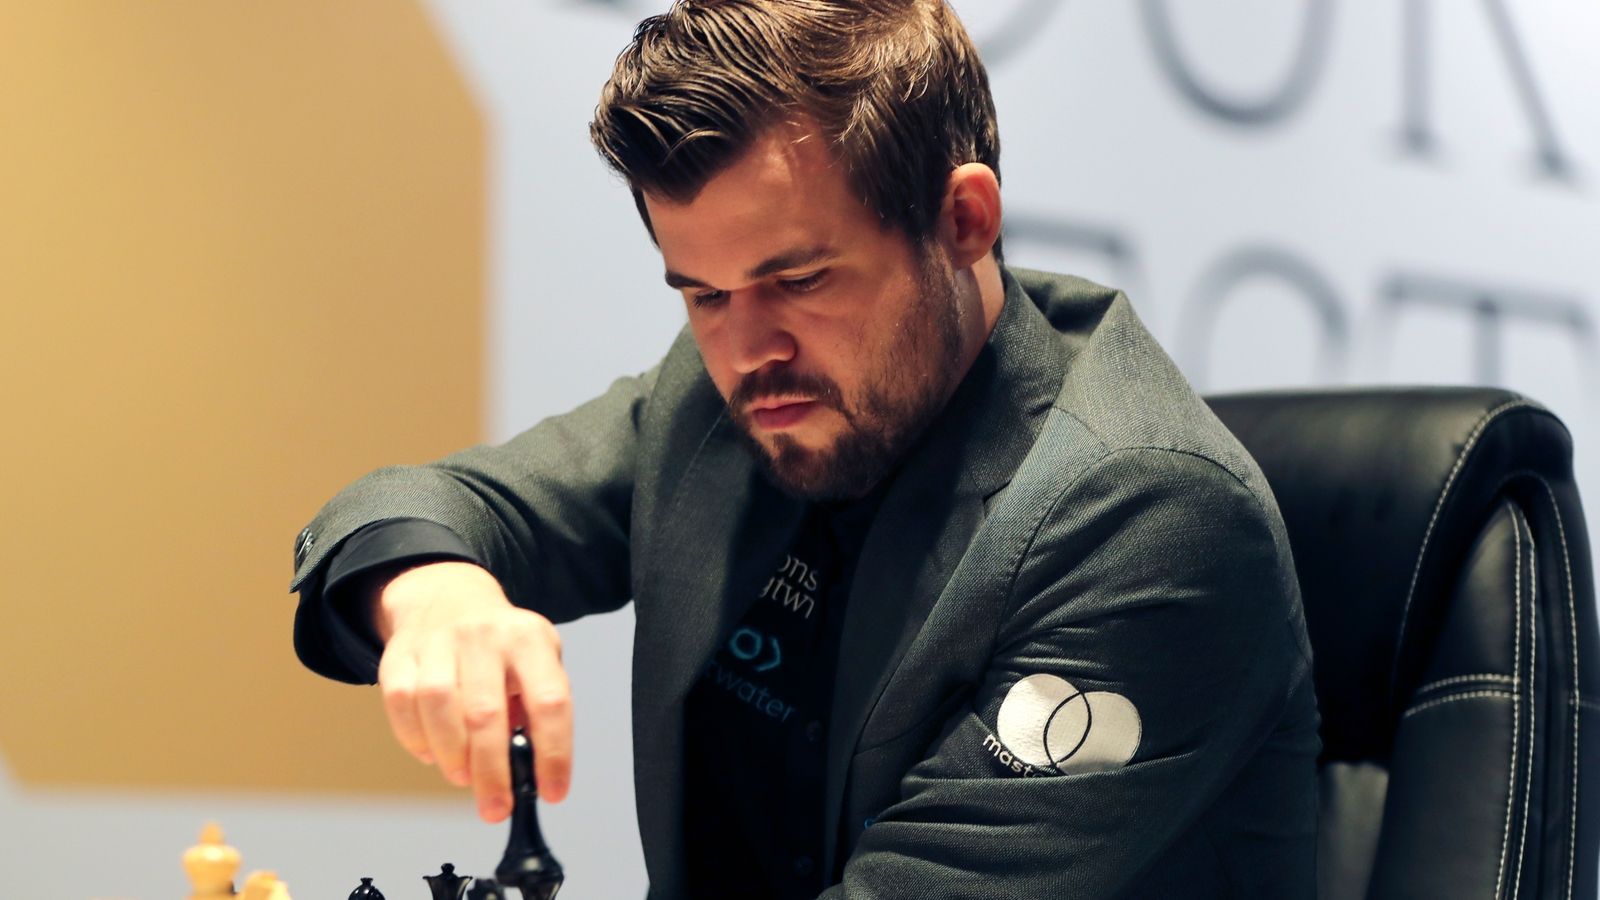 No. 1 Chess Player Magnus Carlsen Accuses Hans Niemann of Cheating